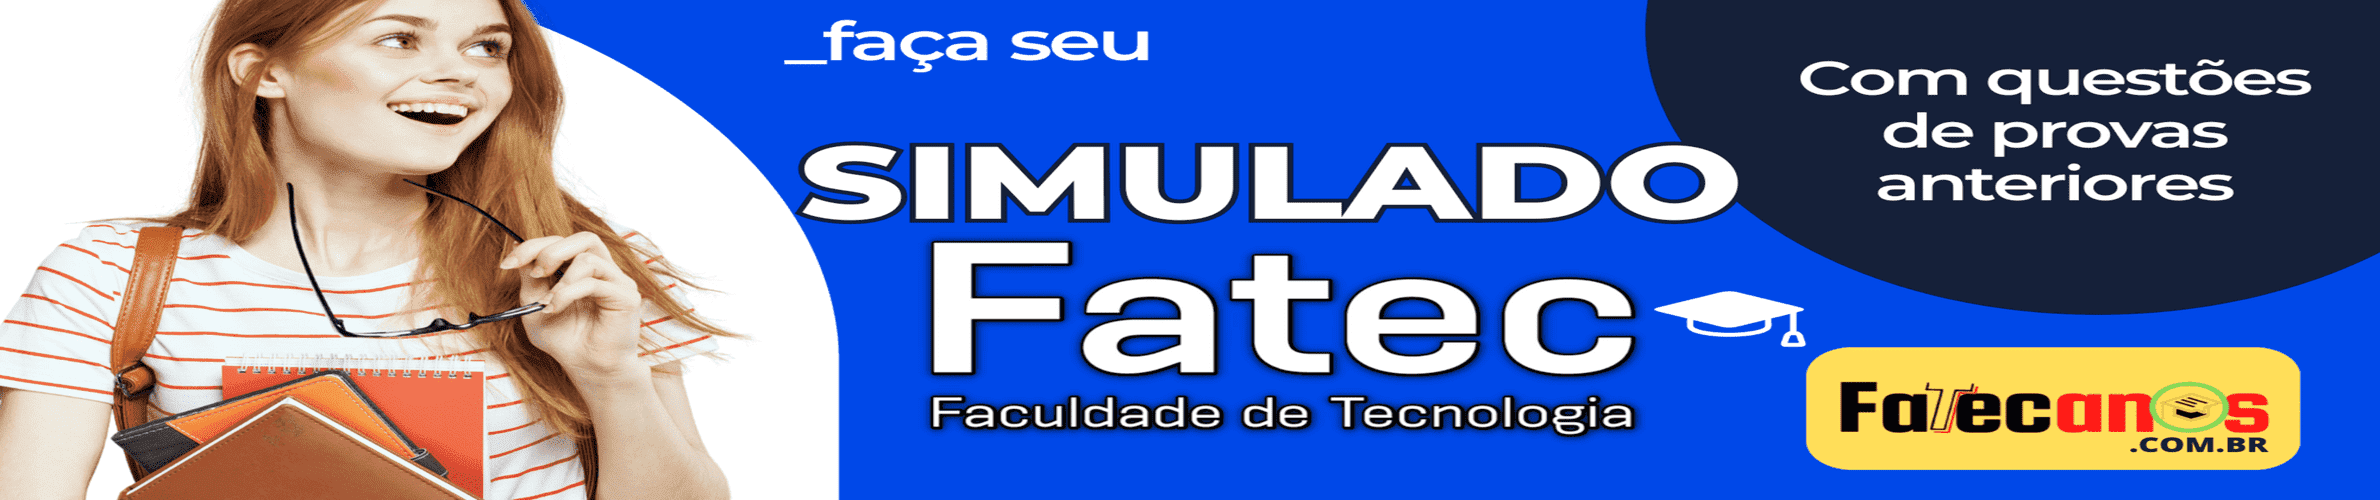 Simulado online fatec